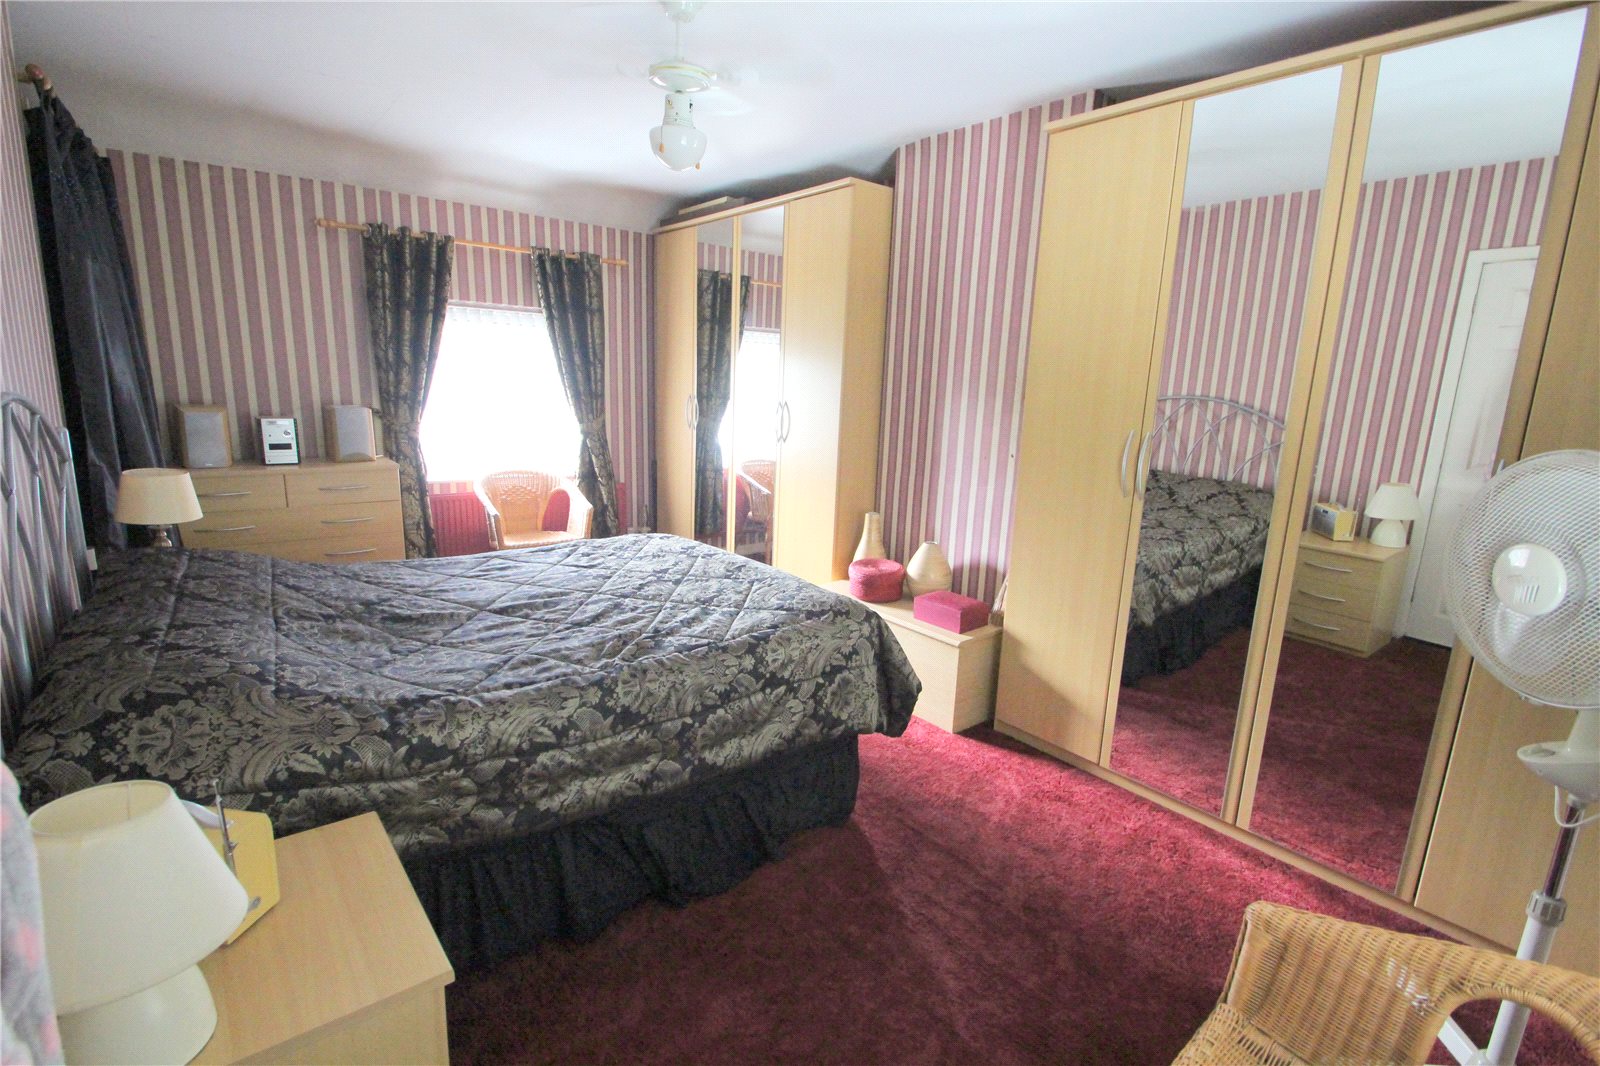 Cj Hole Southville 3 Bedroom House For Sale In Wedmore Vale Bedminster 